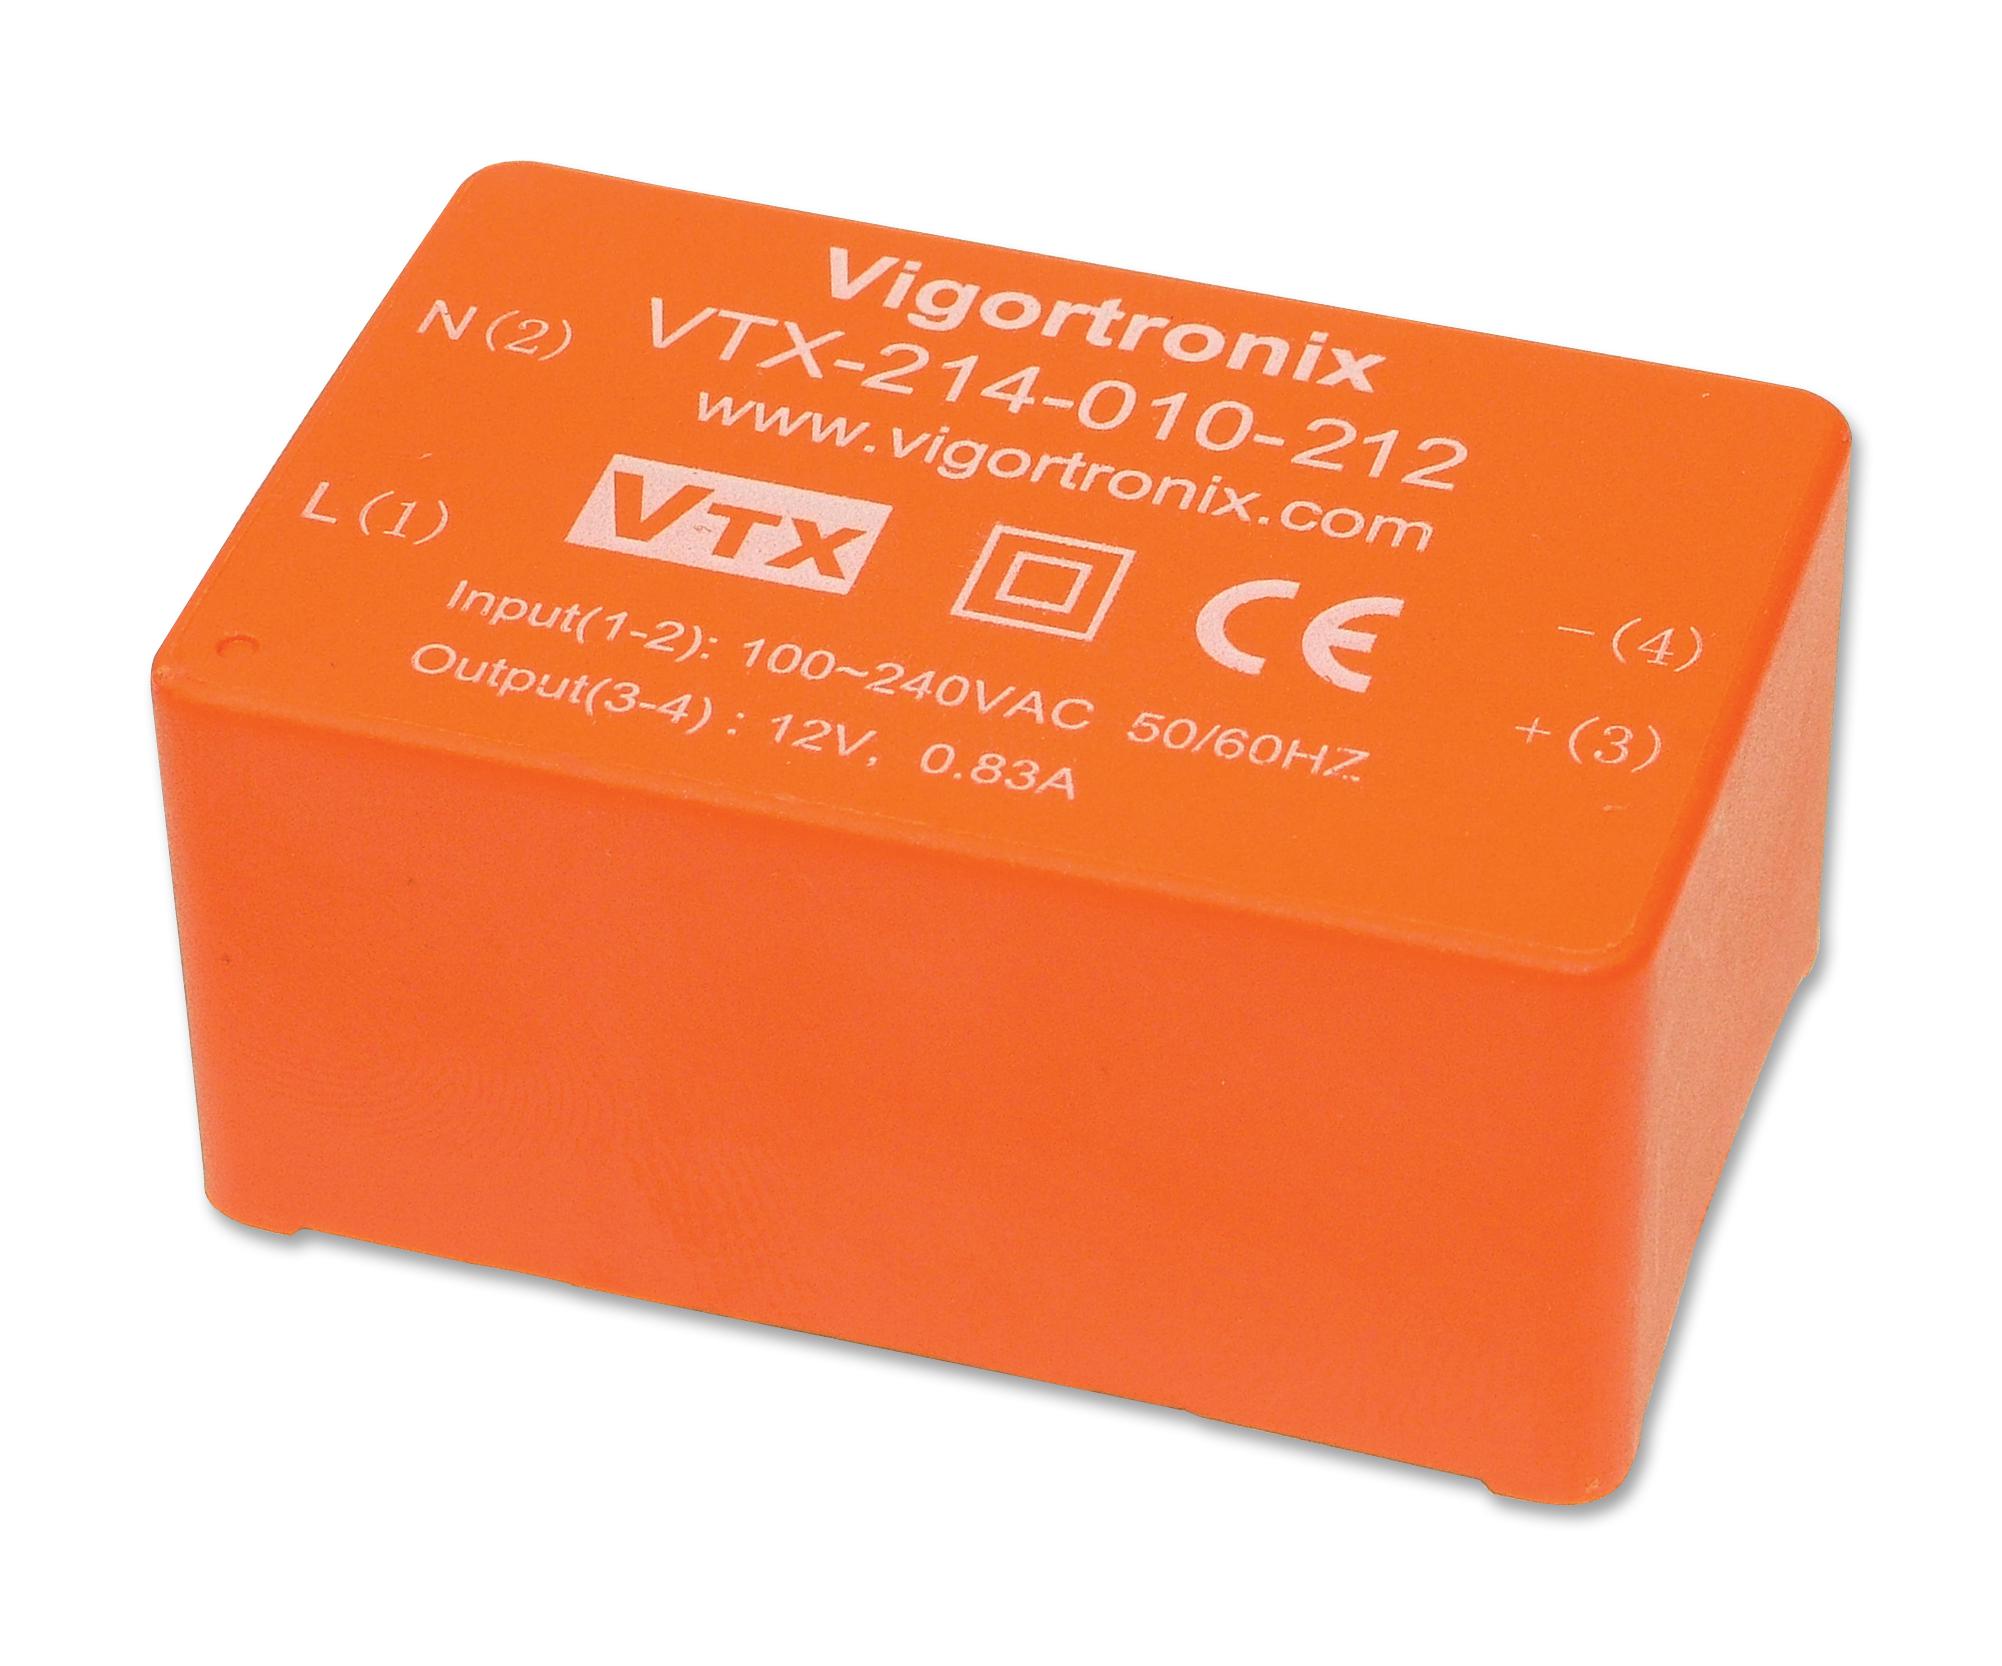 VIGORTRONIX PCB Mount - Single Ouput VTX-214-010-224 POWER SUPPLY, AC-DC, 24V, 0.416A VIGORTRONIX 2464692 VTX-214-010-224